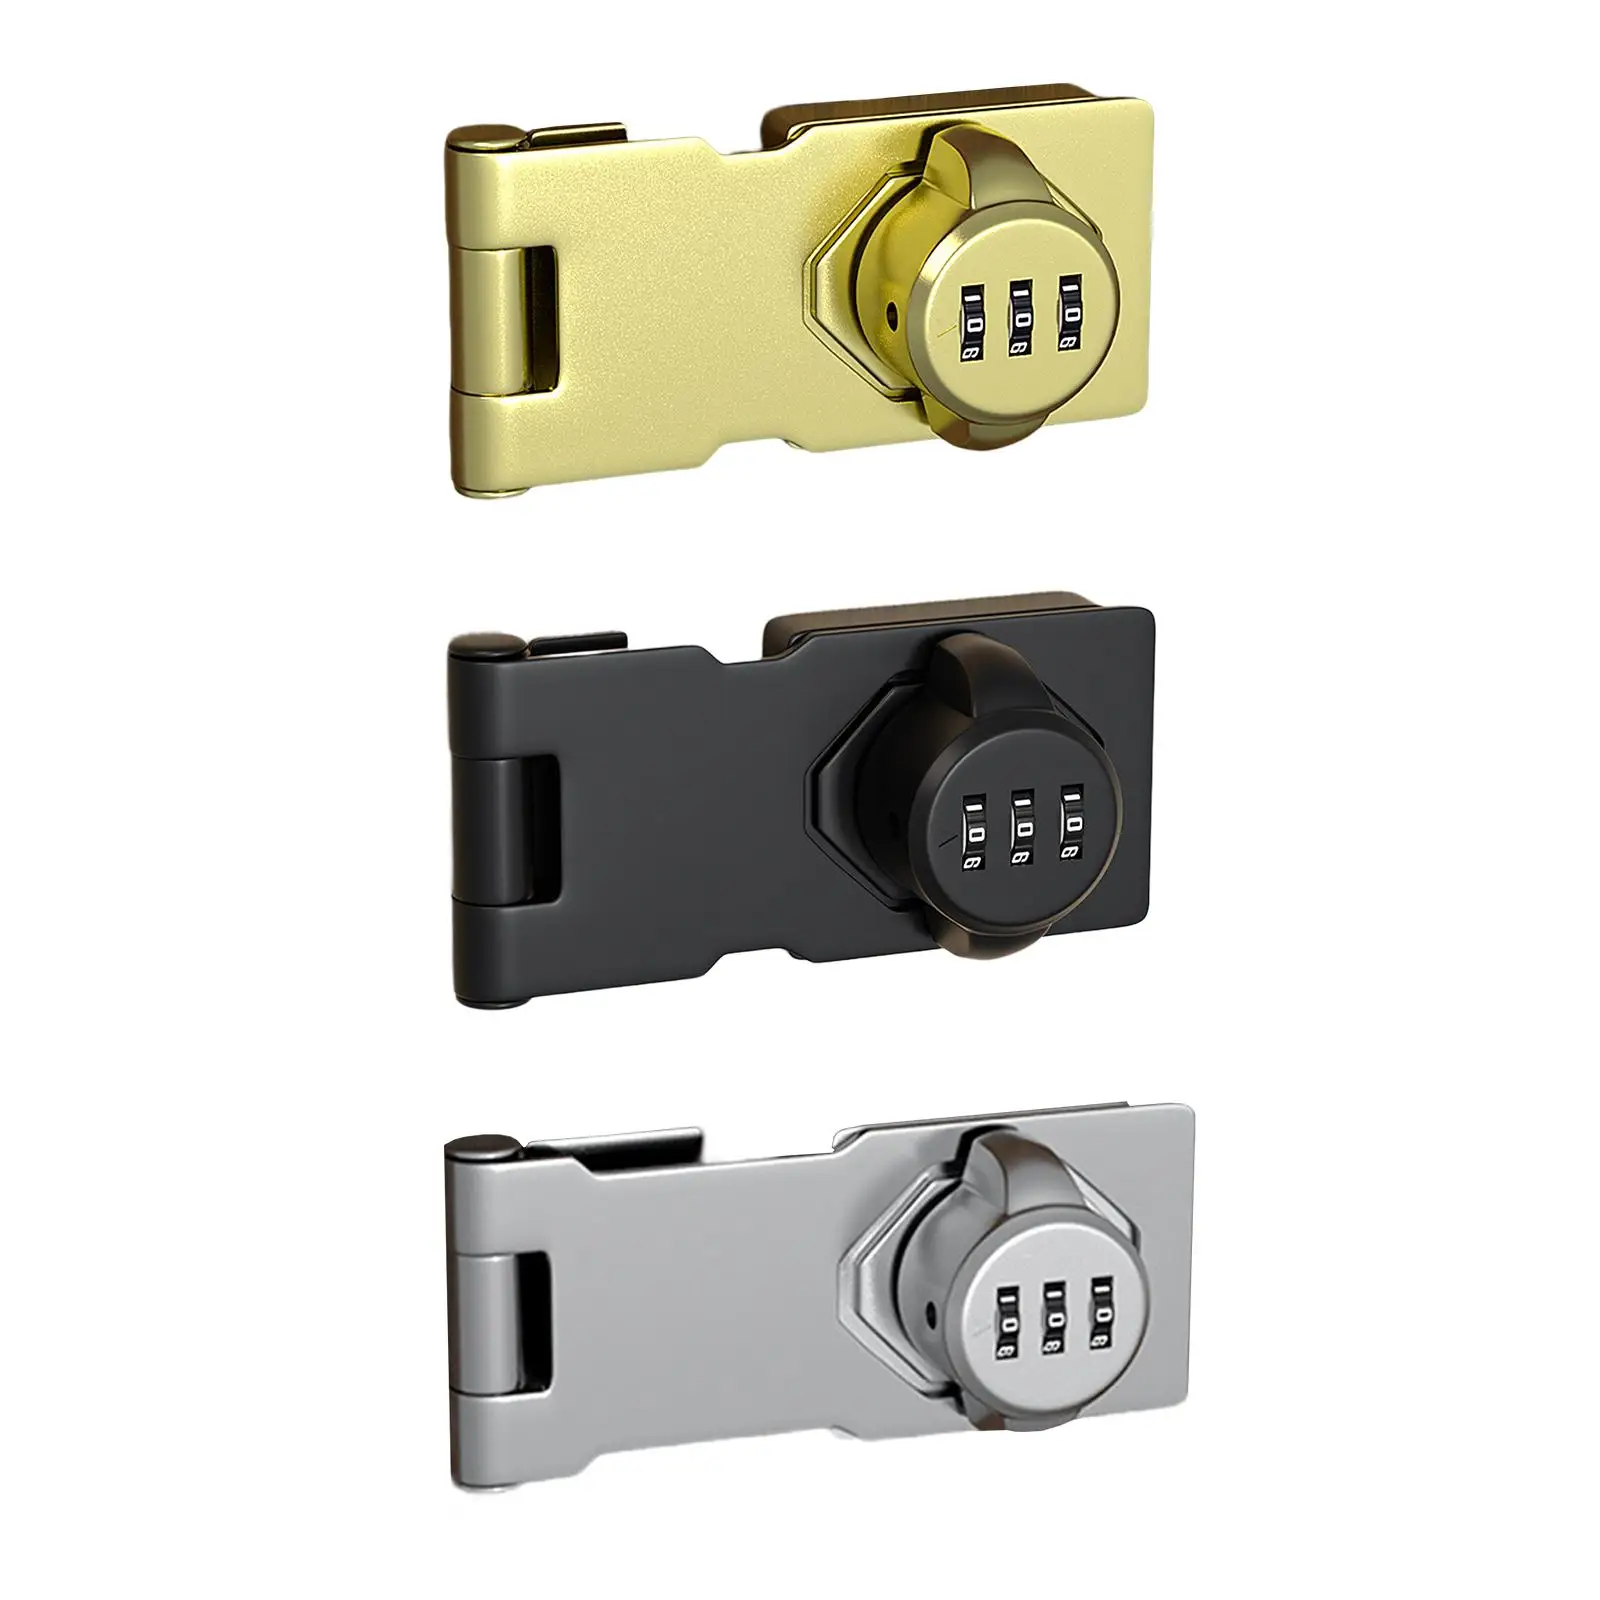 Mechanical Password Lock Keyless Rotary Hasp Lock File Cabinet Lock Refrigerator Lock for Small Doors Barn Door Cabinets Garden